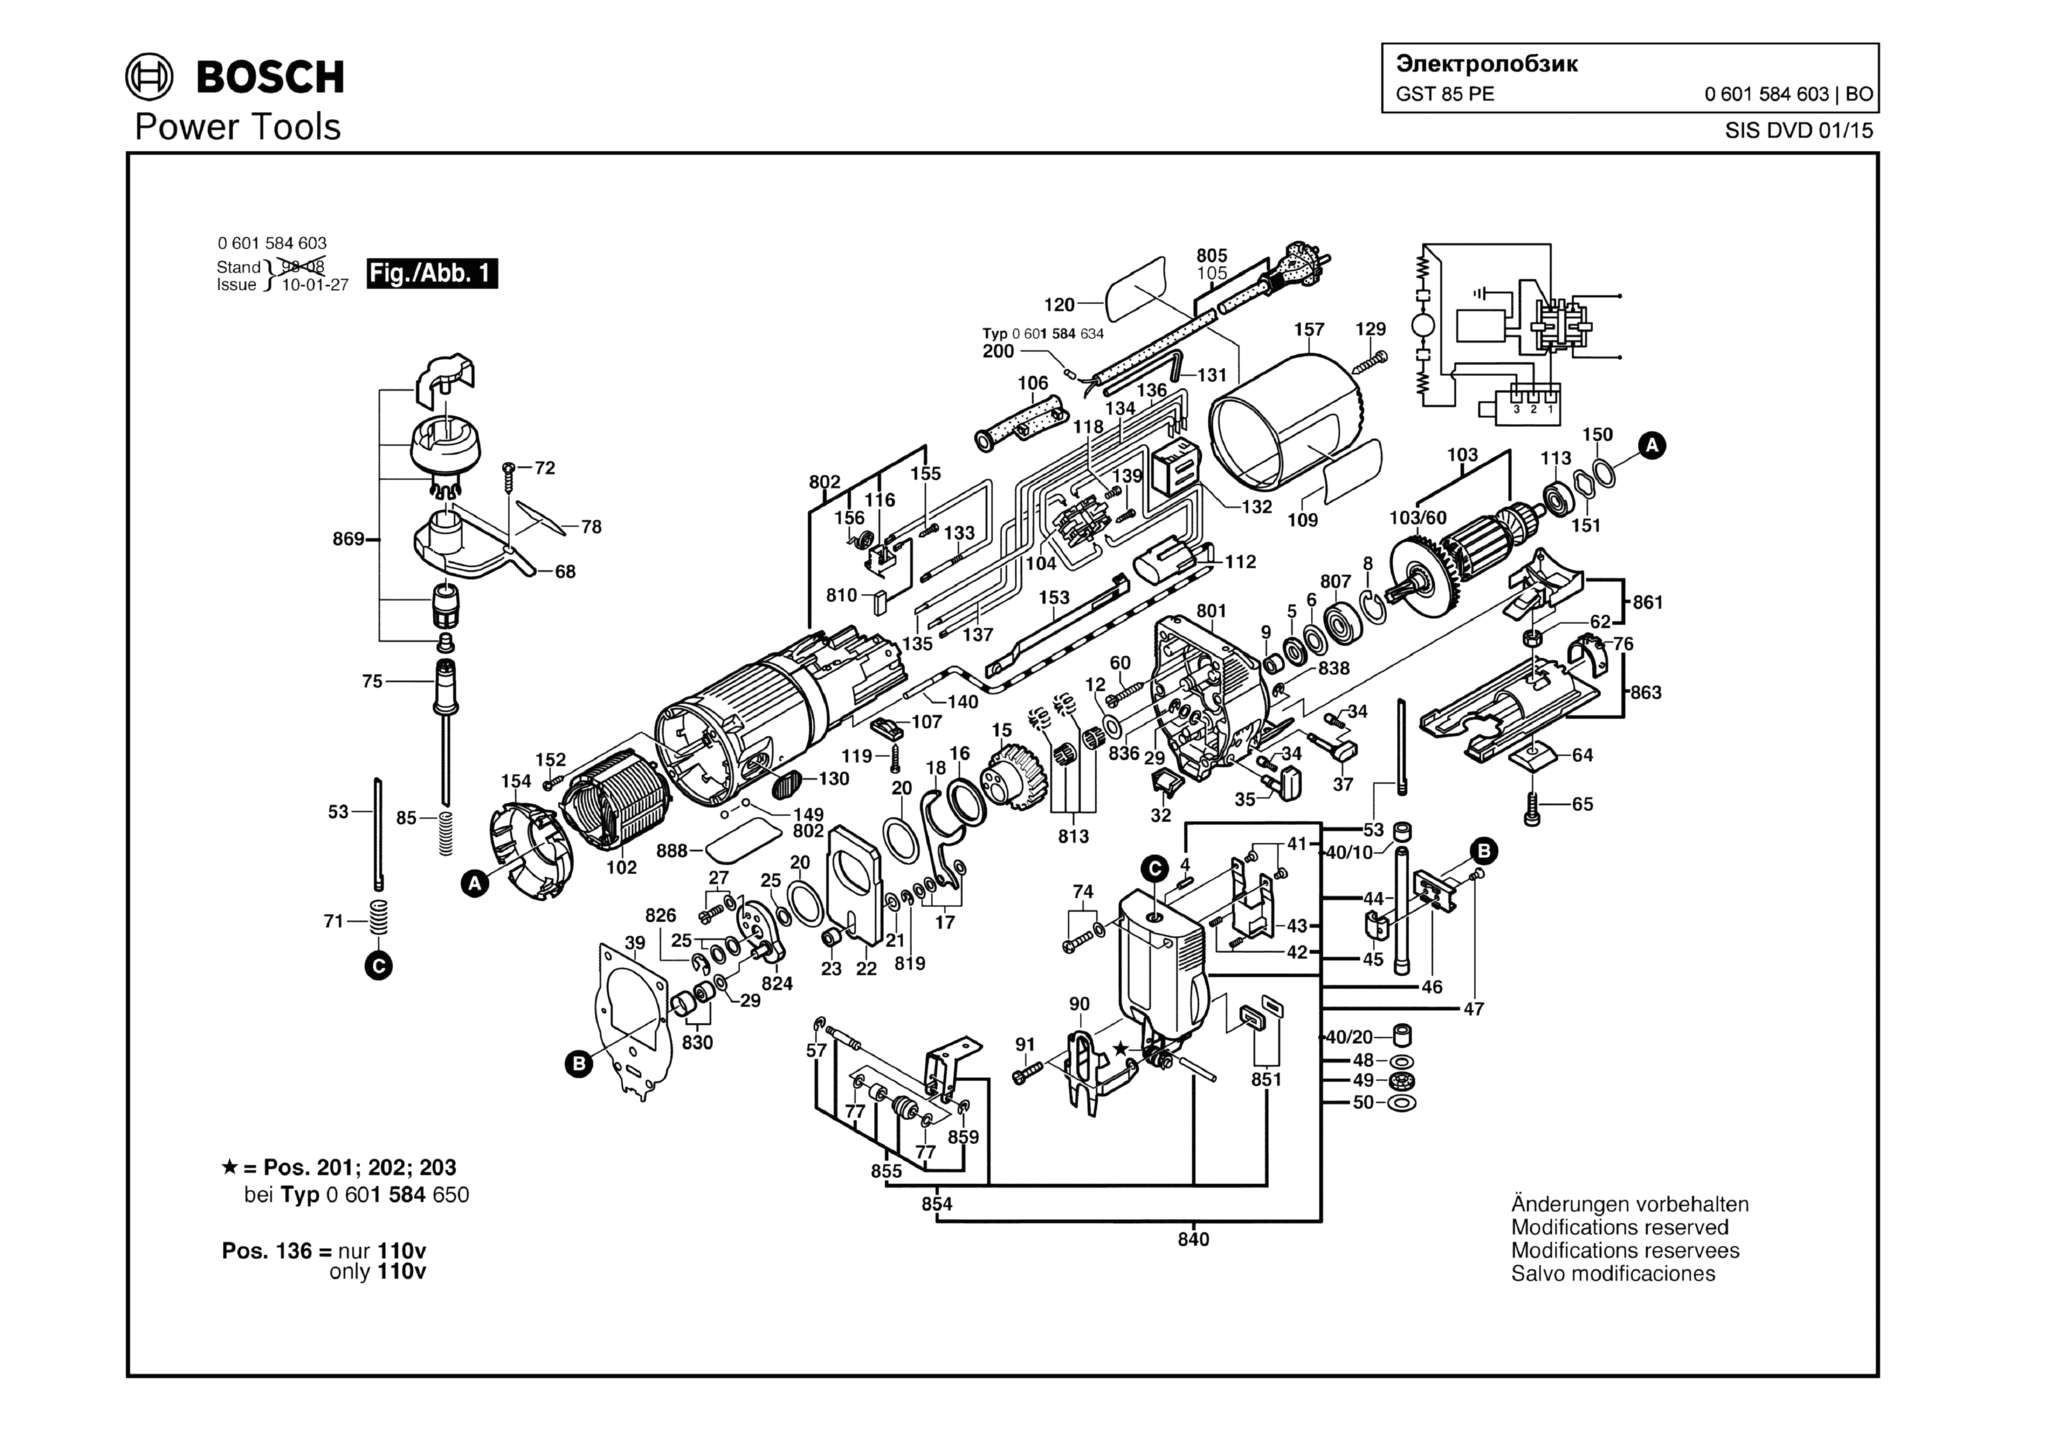 Запчасти, схема и деталировка Bosch GST 85 PE (ТИП 0601584603)